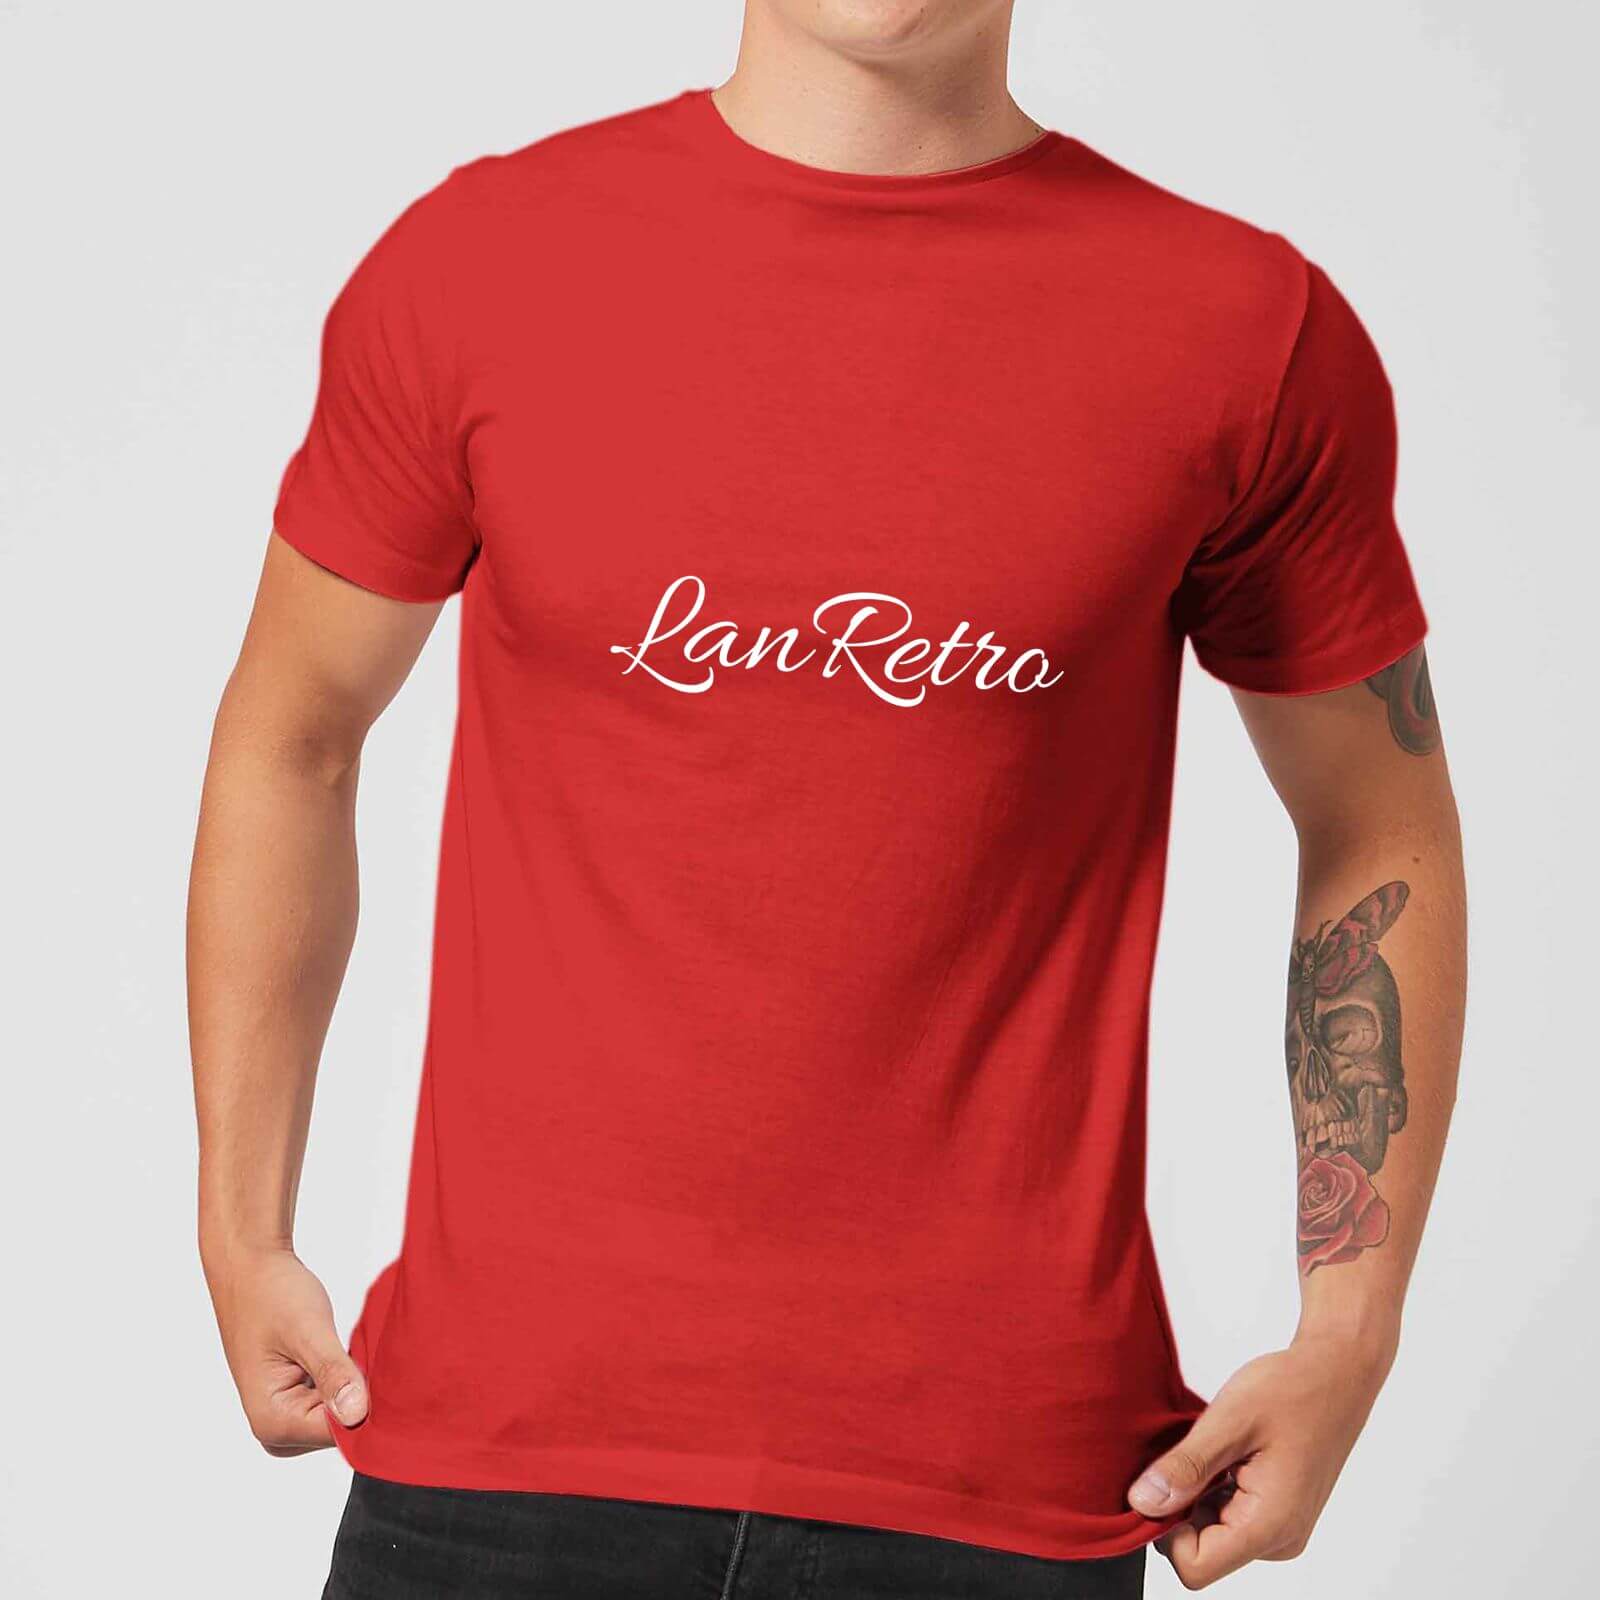 Lanre Retro Lanretro Men's T-Shirt - Red - S - Red